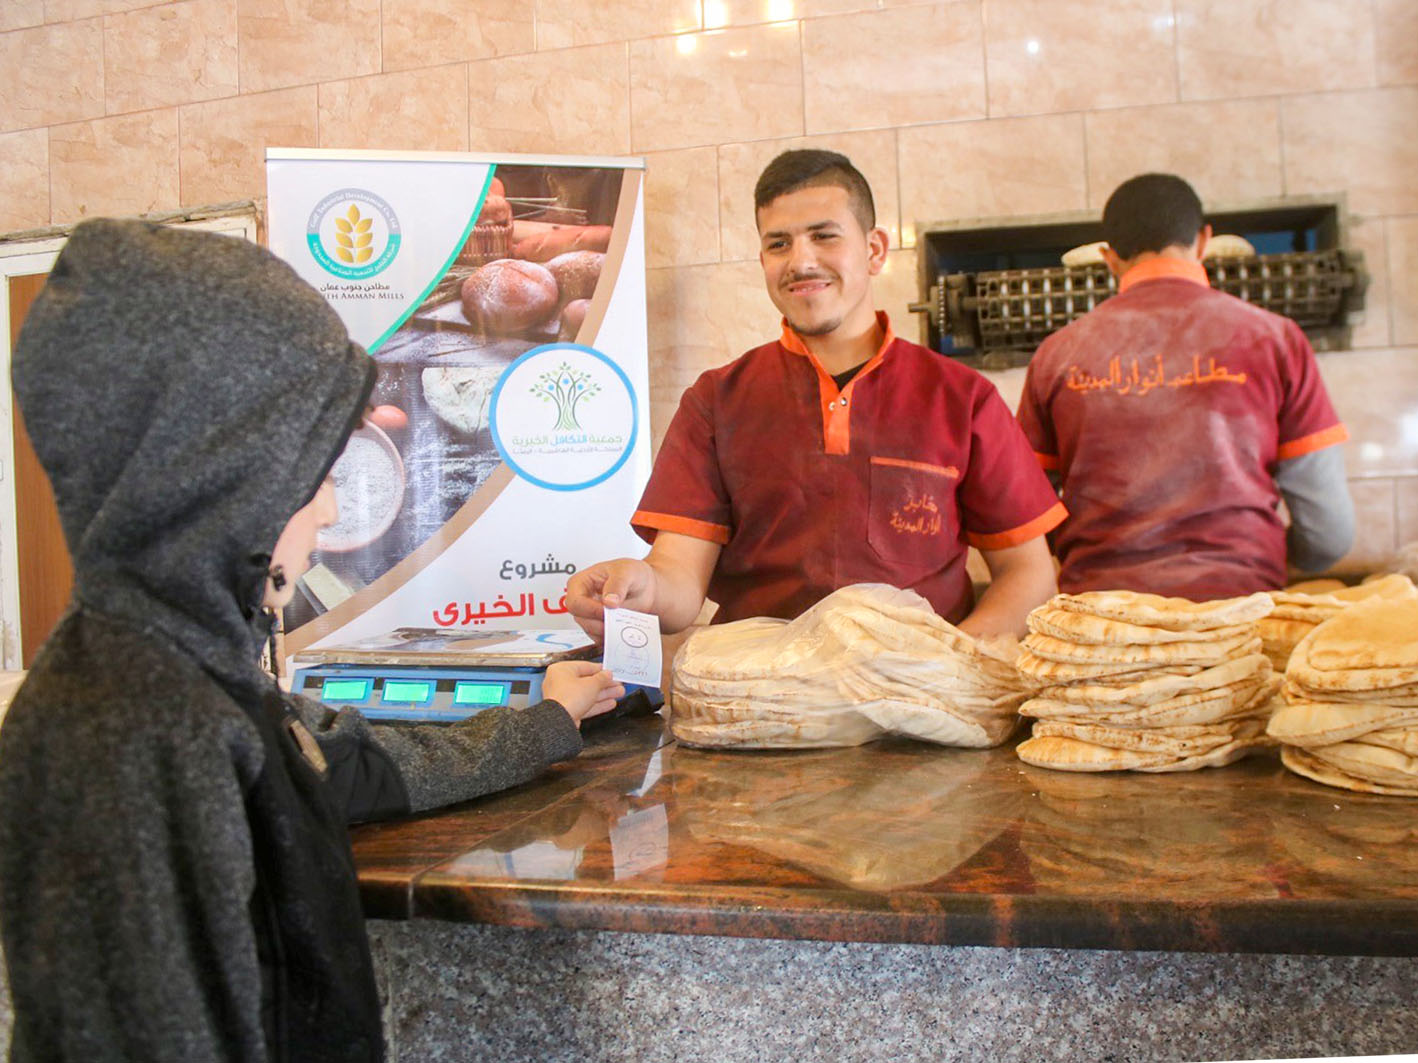 South Amman Flour Mills The “Bread Loaf” Campaign in Jordan 